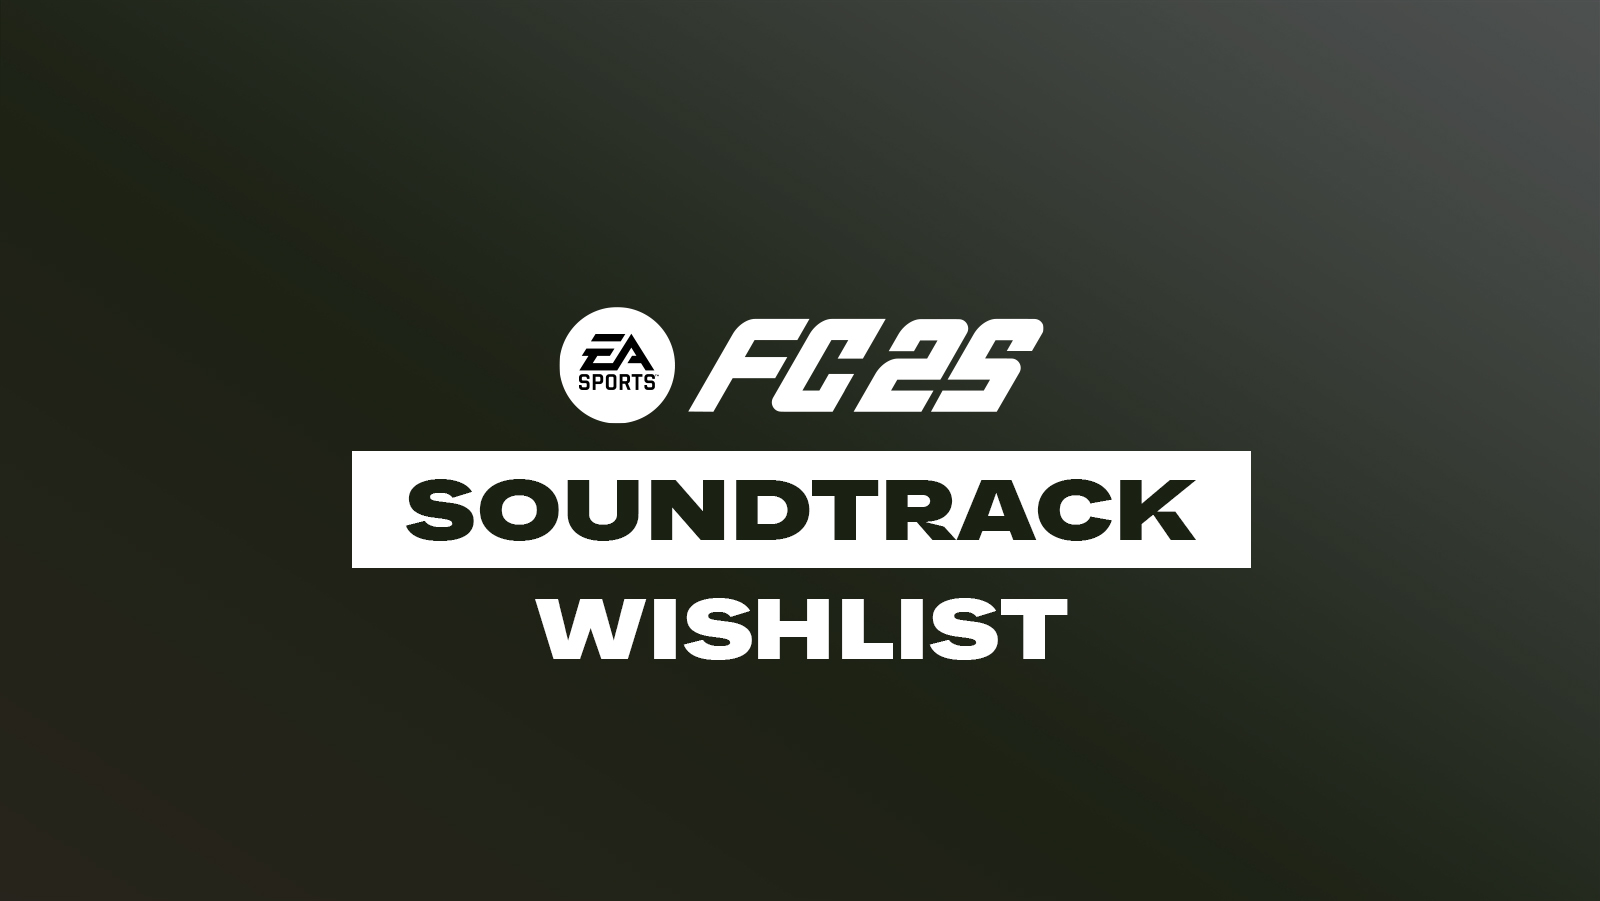 FC 25 Soundtrack Wishlist